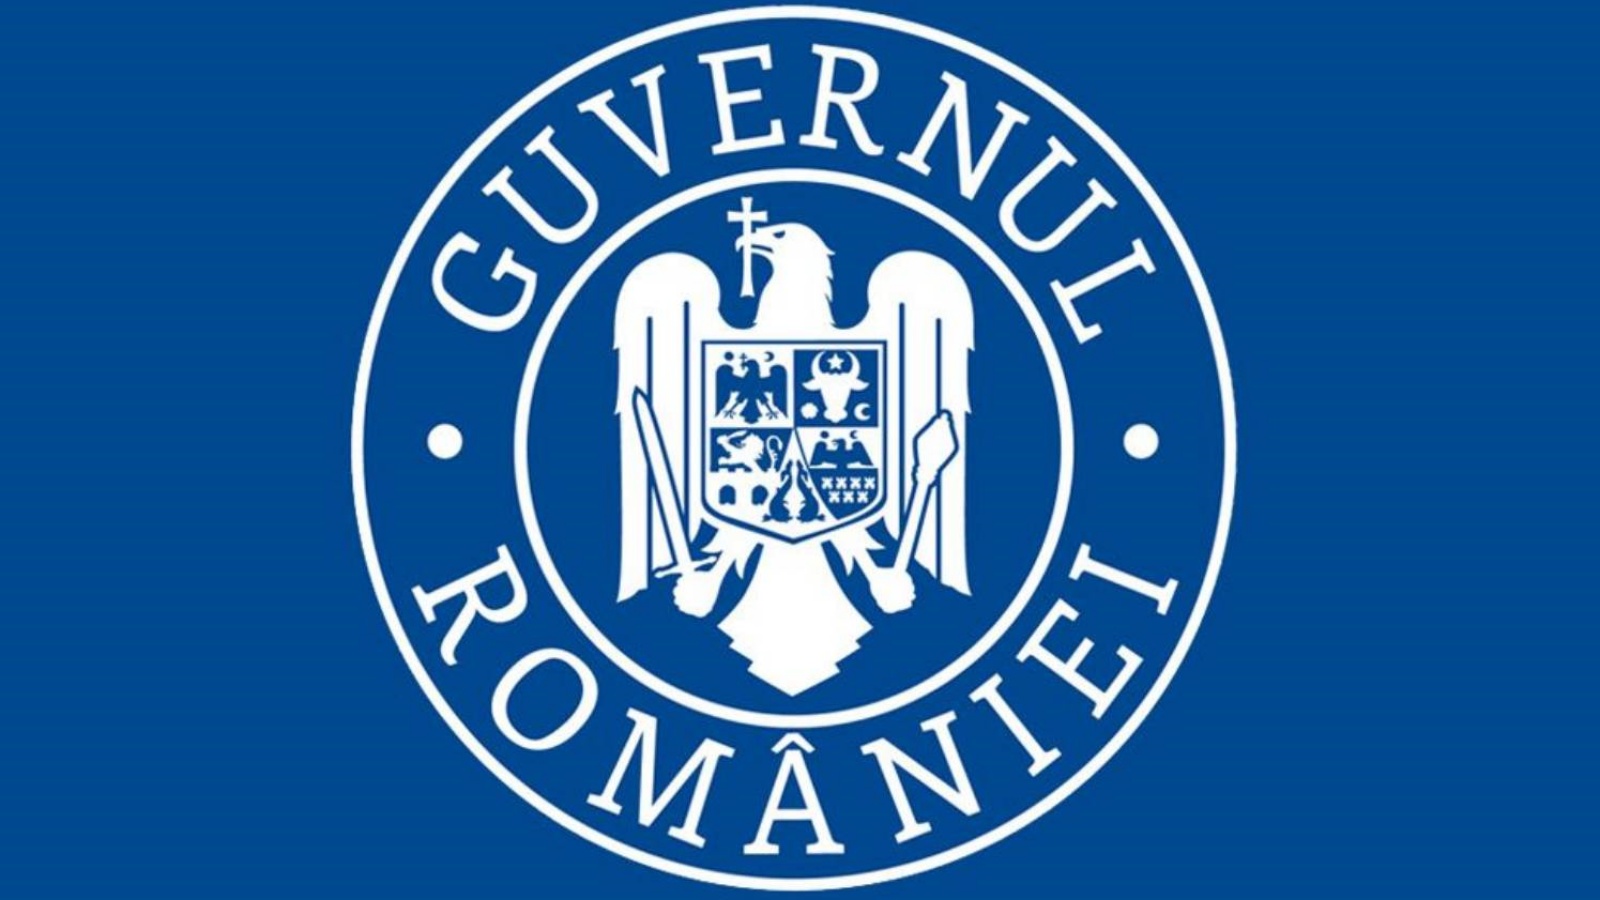 Roemeense regeringsdag zonder doden in Roemenië